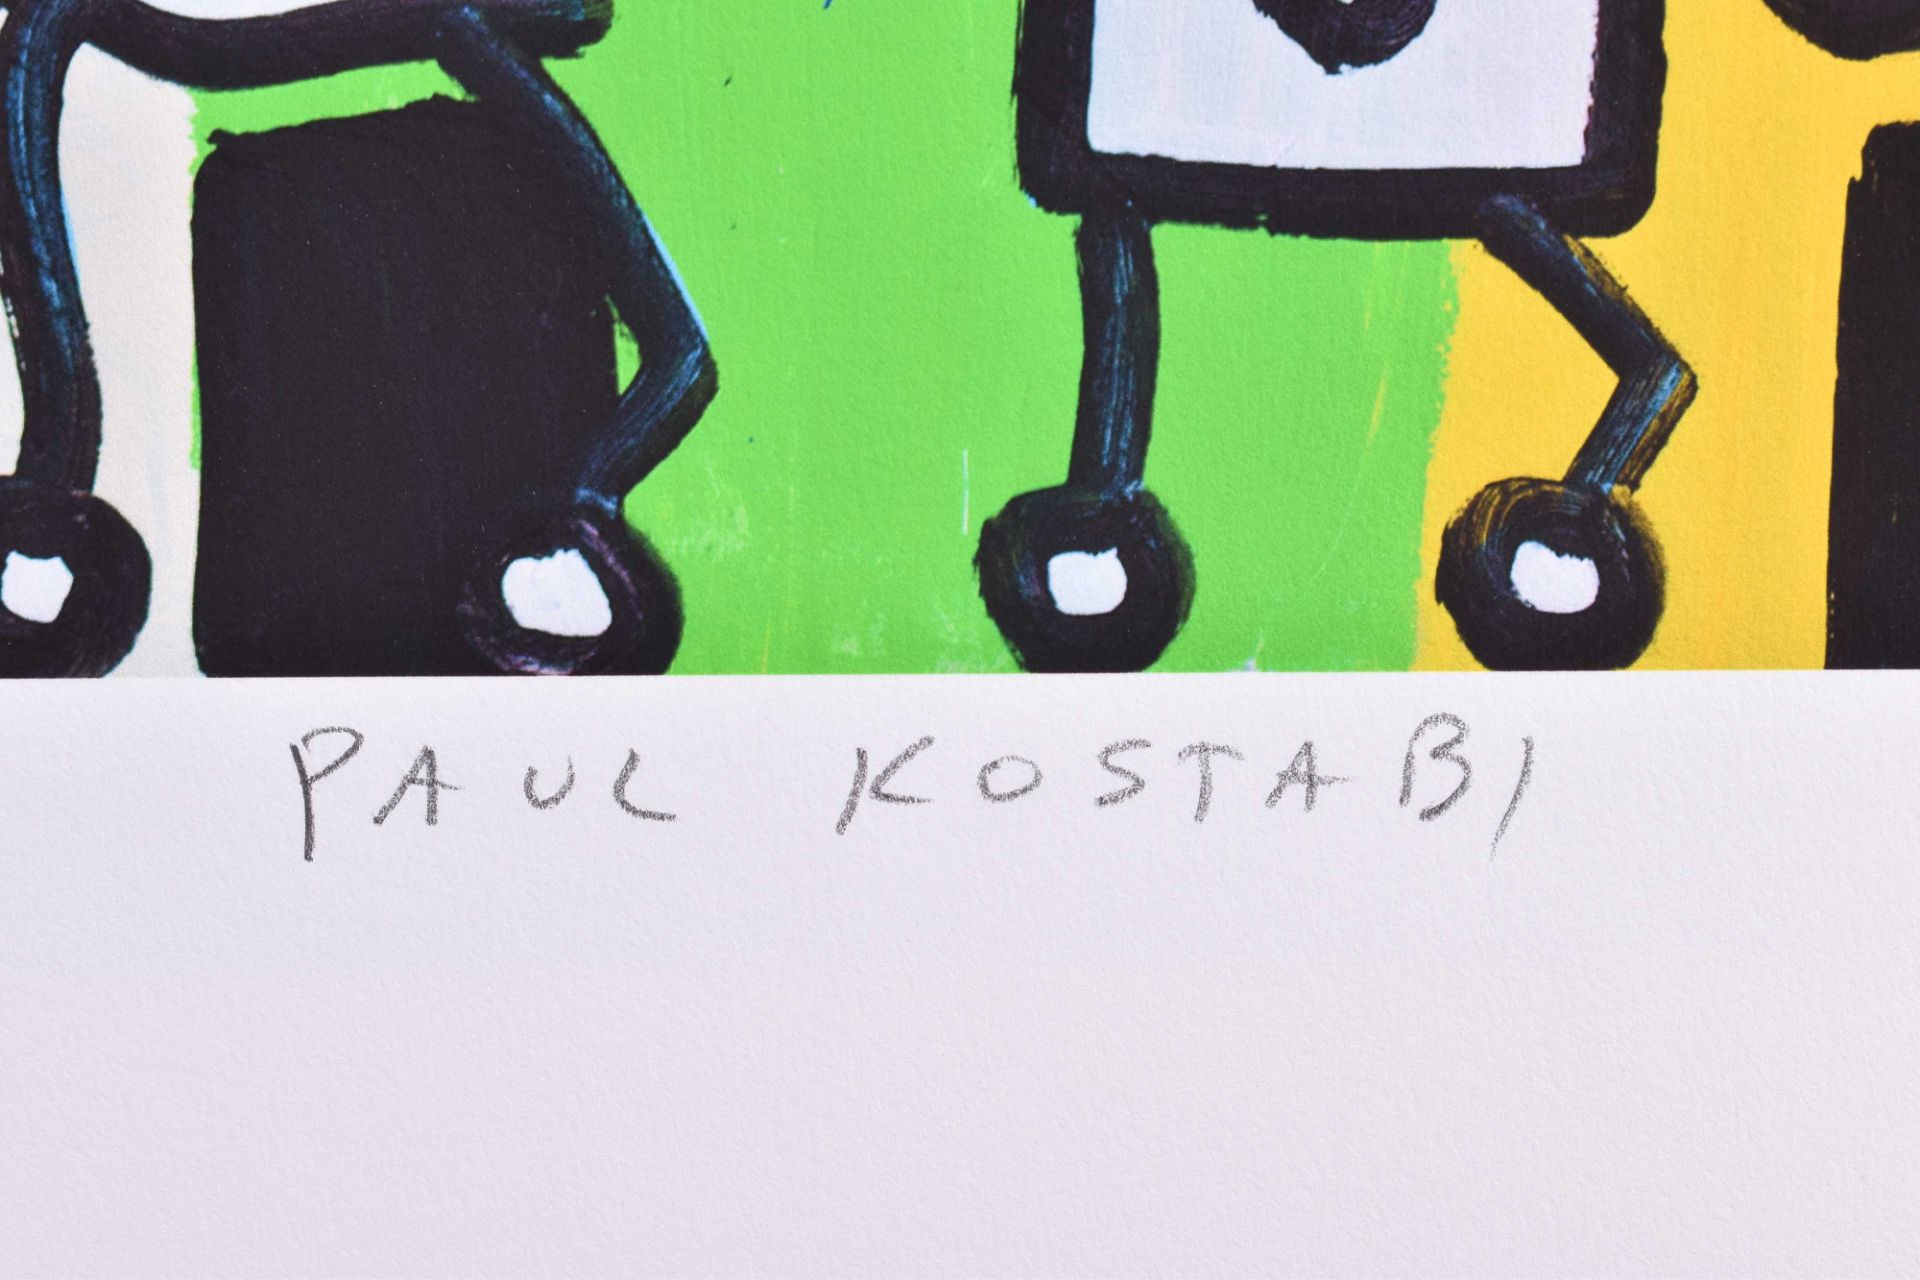 Paul KOSTABI (1962) - Image 2 of 3